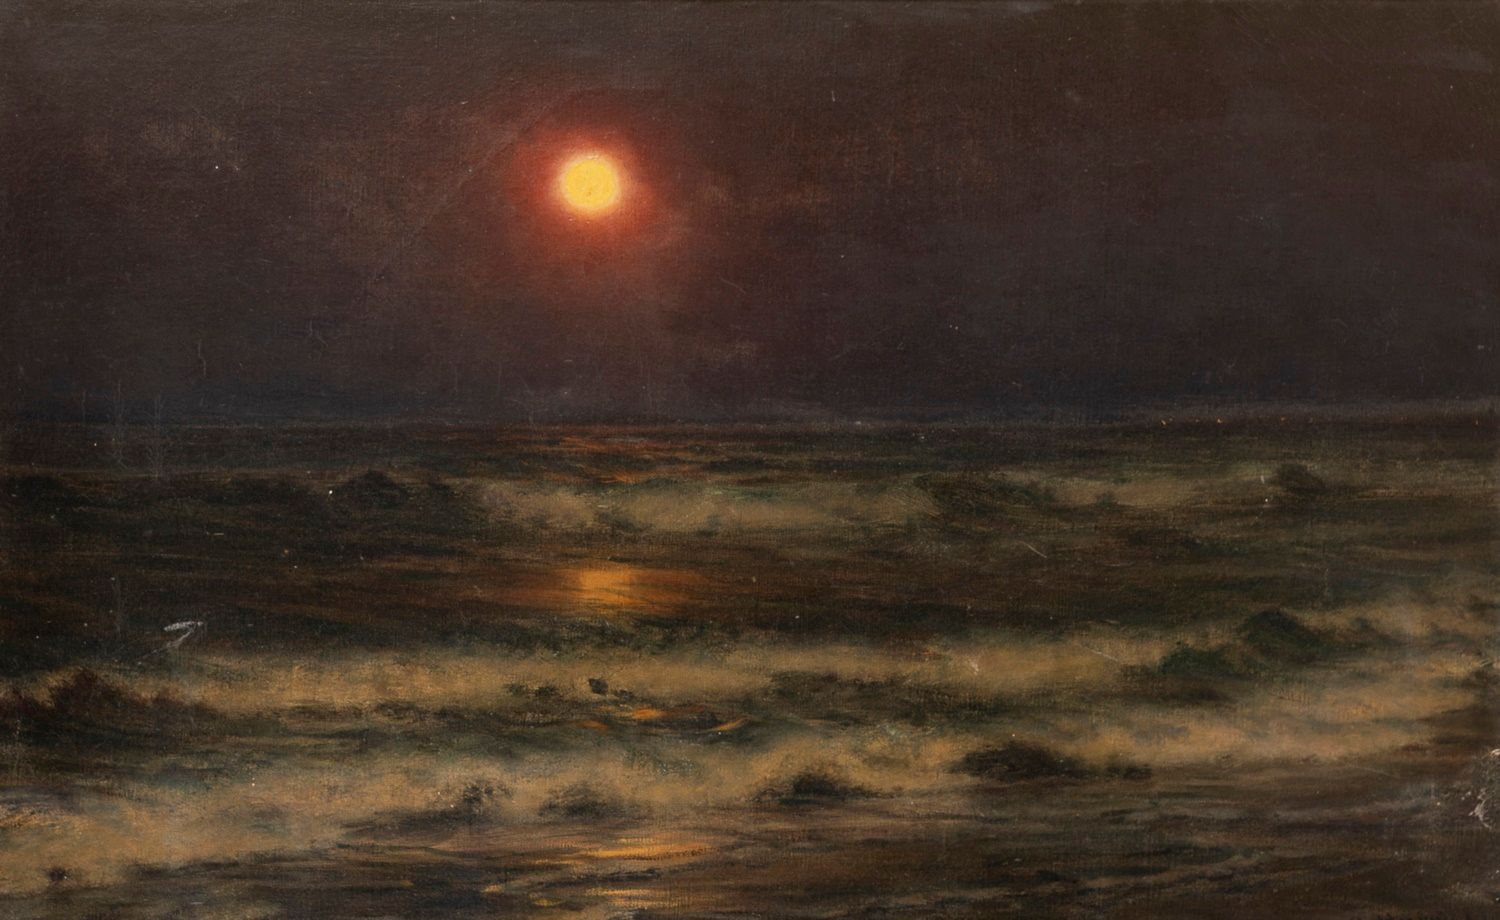 Null 亚历山大-哈里森(1853-1930)

黄昏中的海洋

布面油画

签名

48 x 79厘米。